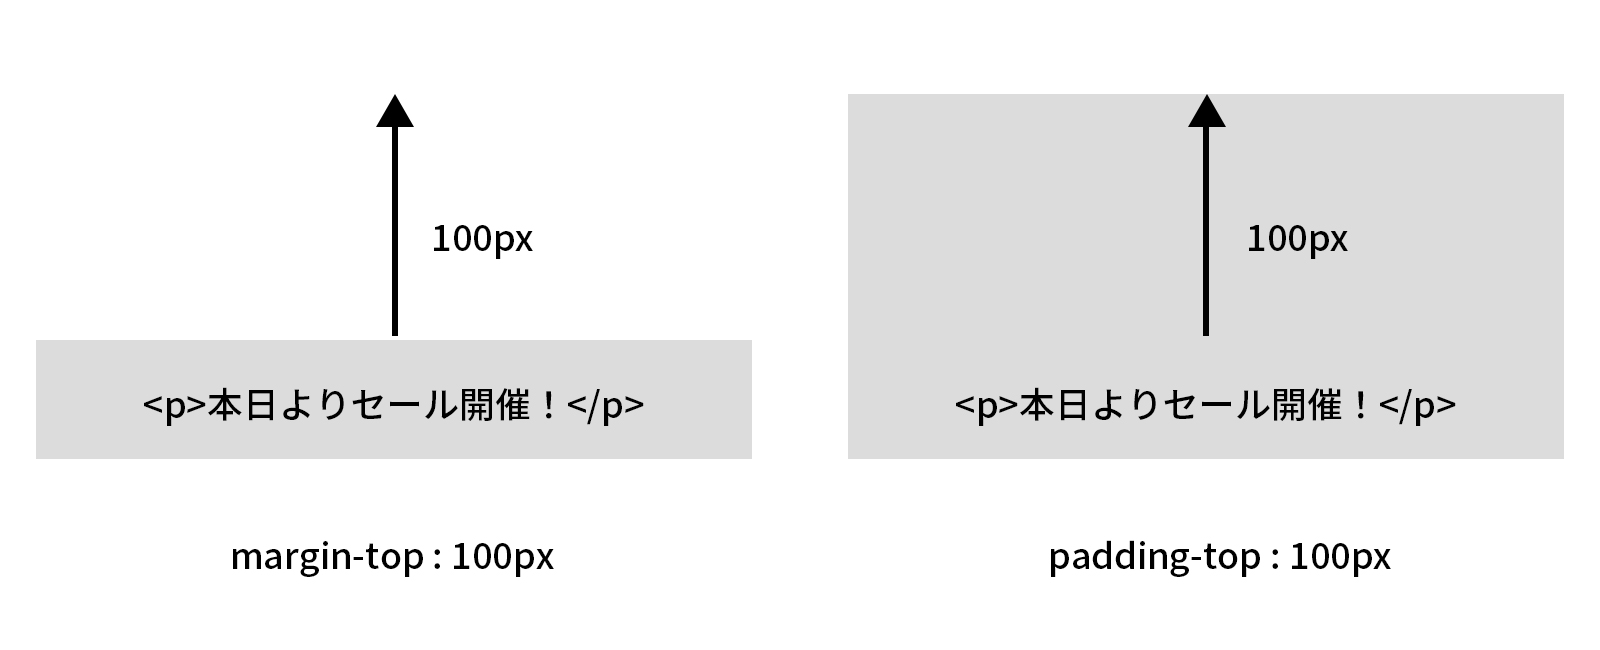 margin-topは外側の上部余白で、padding-topは内側の上部余白